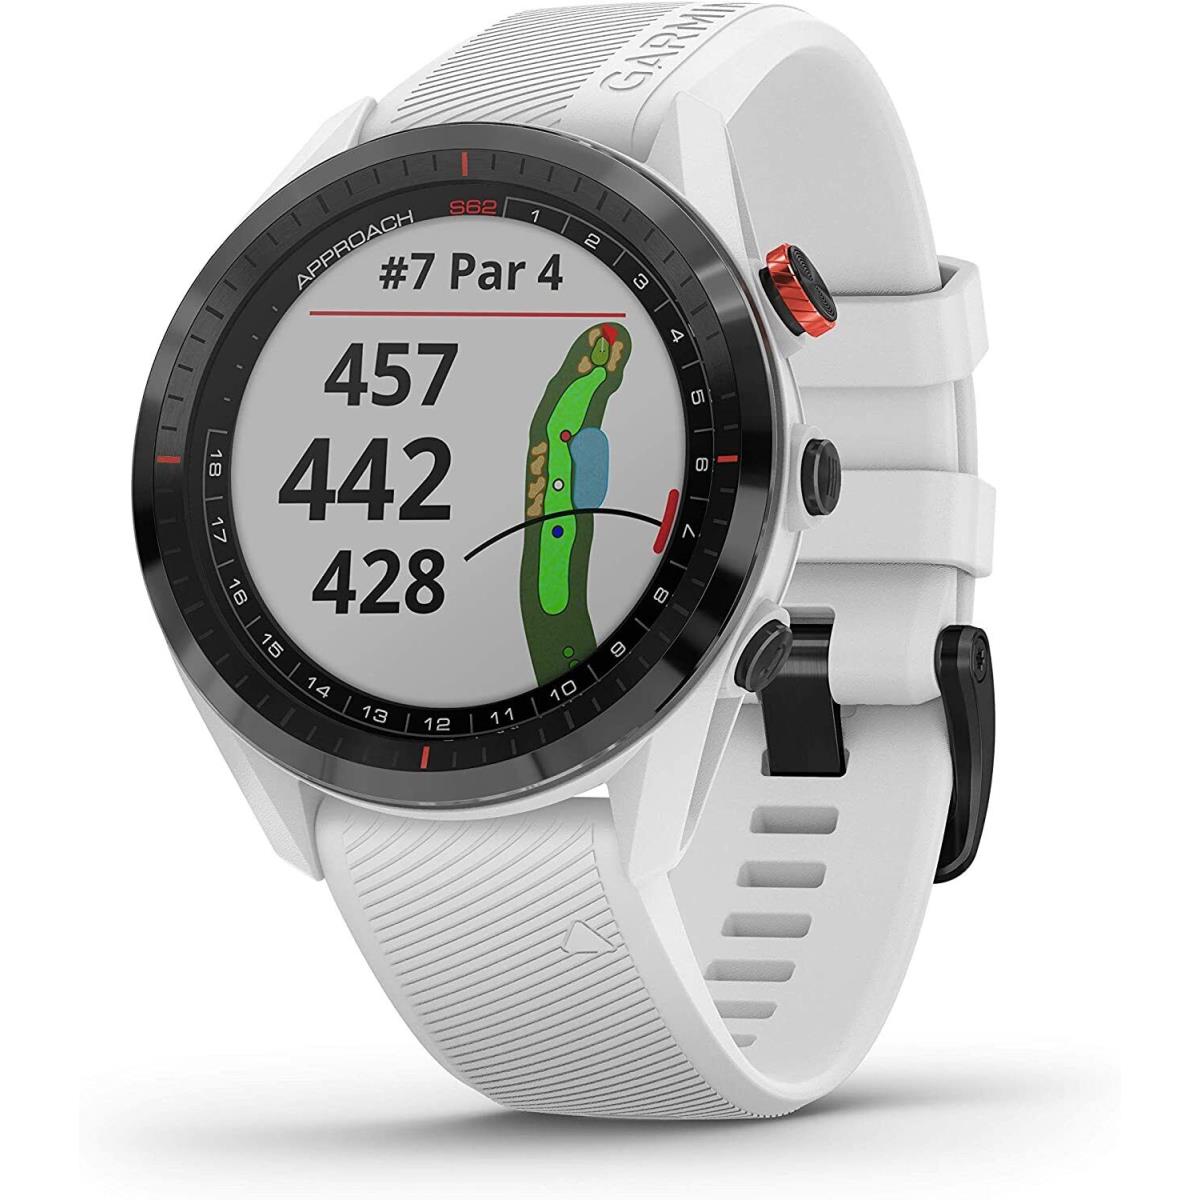 Garmin Approach S62 Premium Golf Gps Watch White - White